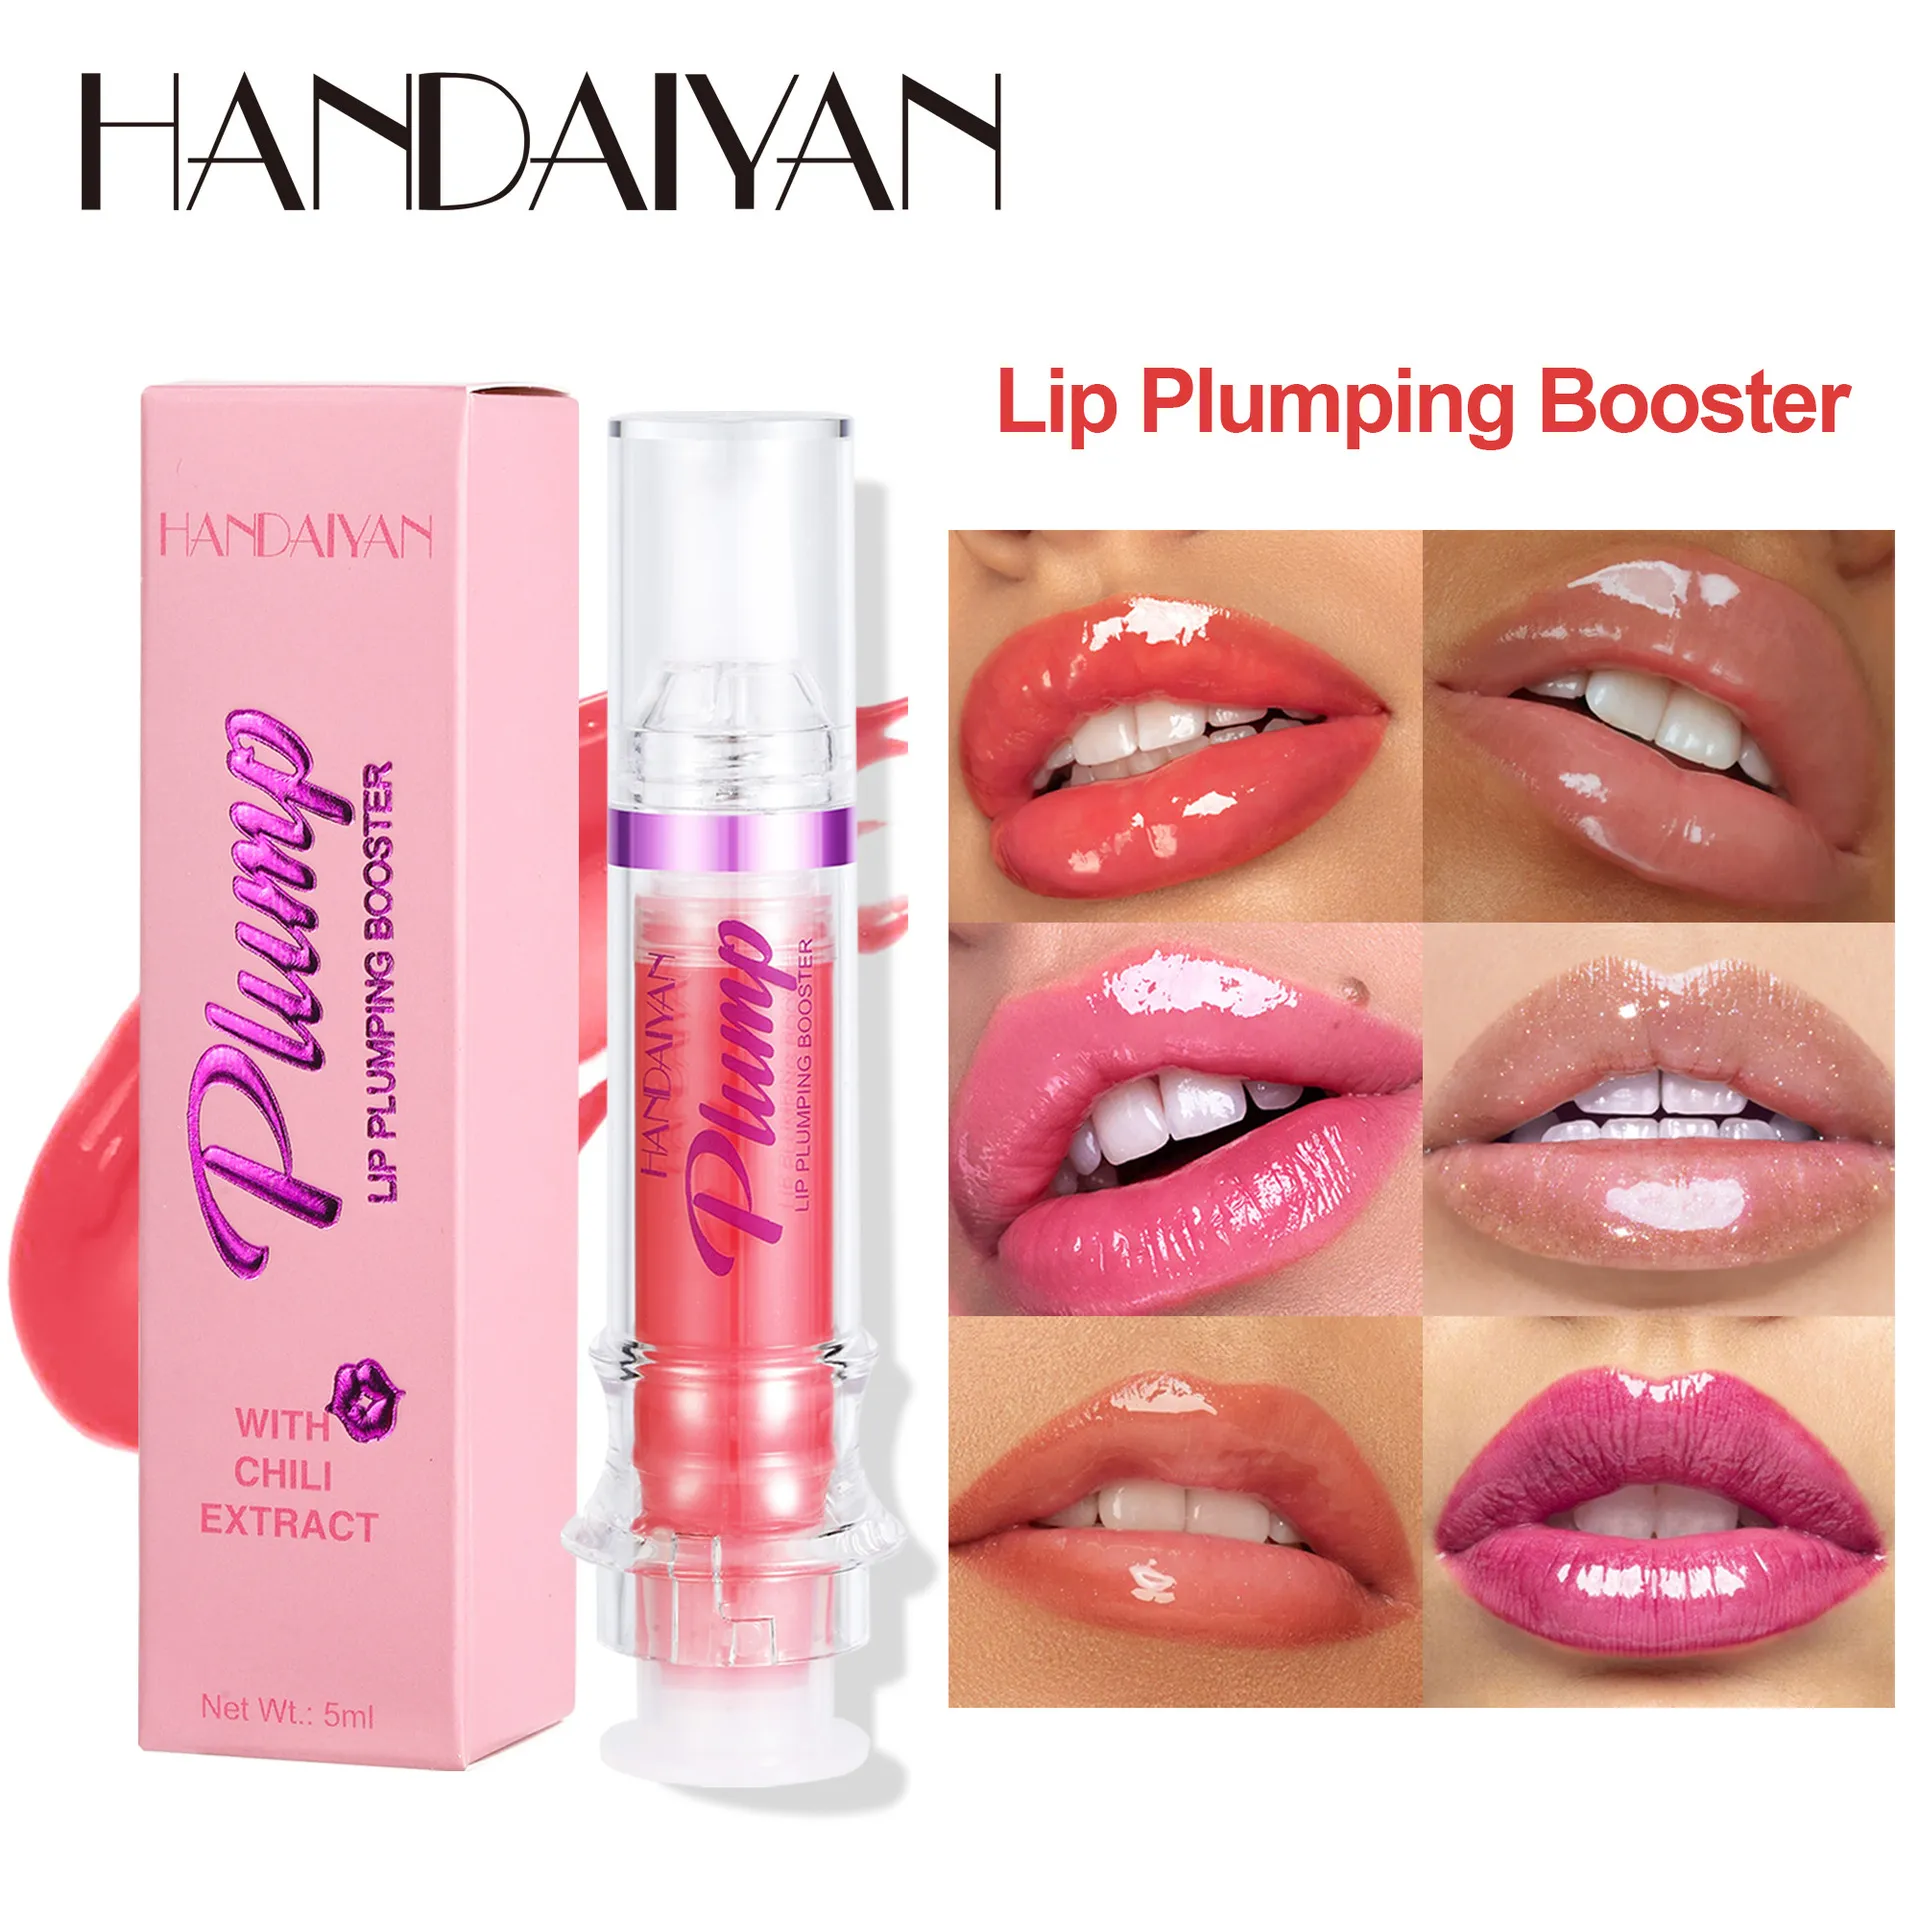 Handaiyan lip vulling booster glanzen hoge glans voor plumper uitziende lippen extreme glans kristalvolume lipolie heet